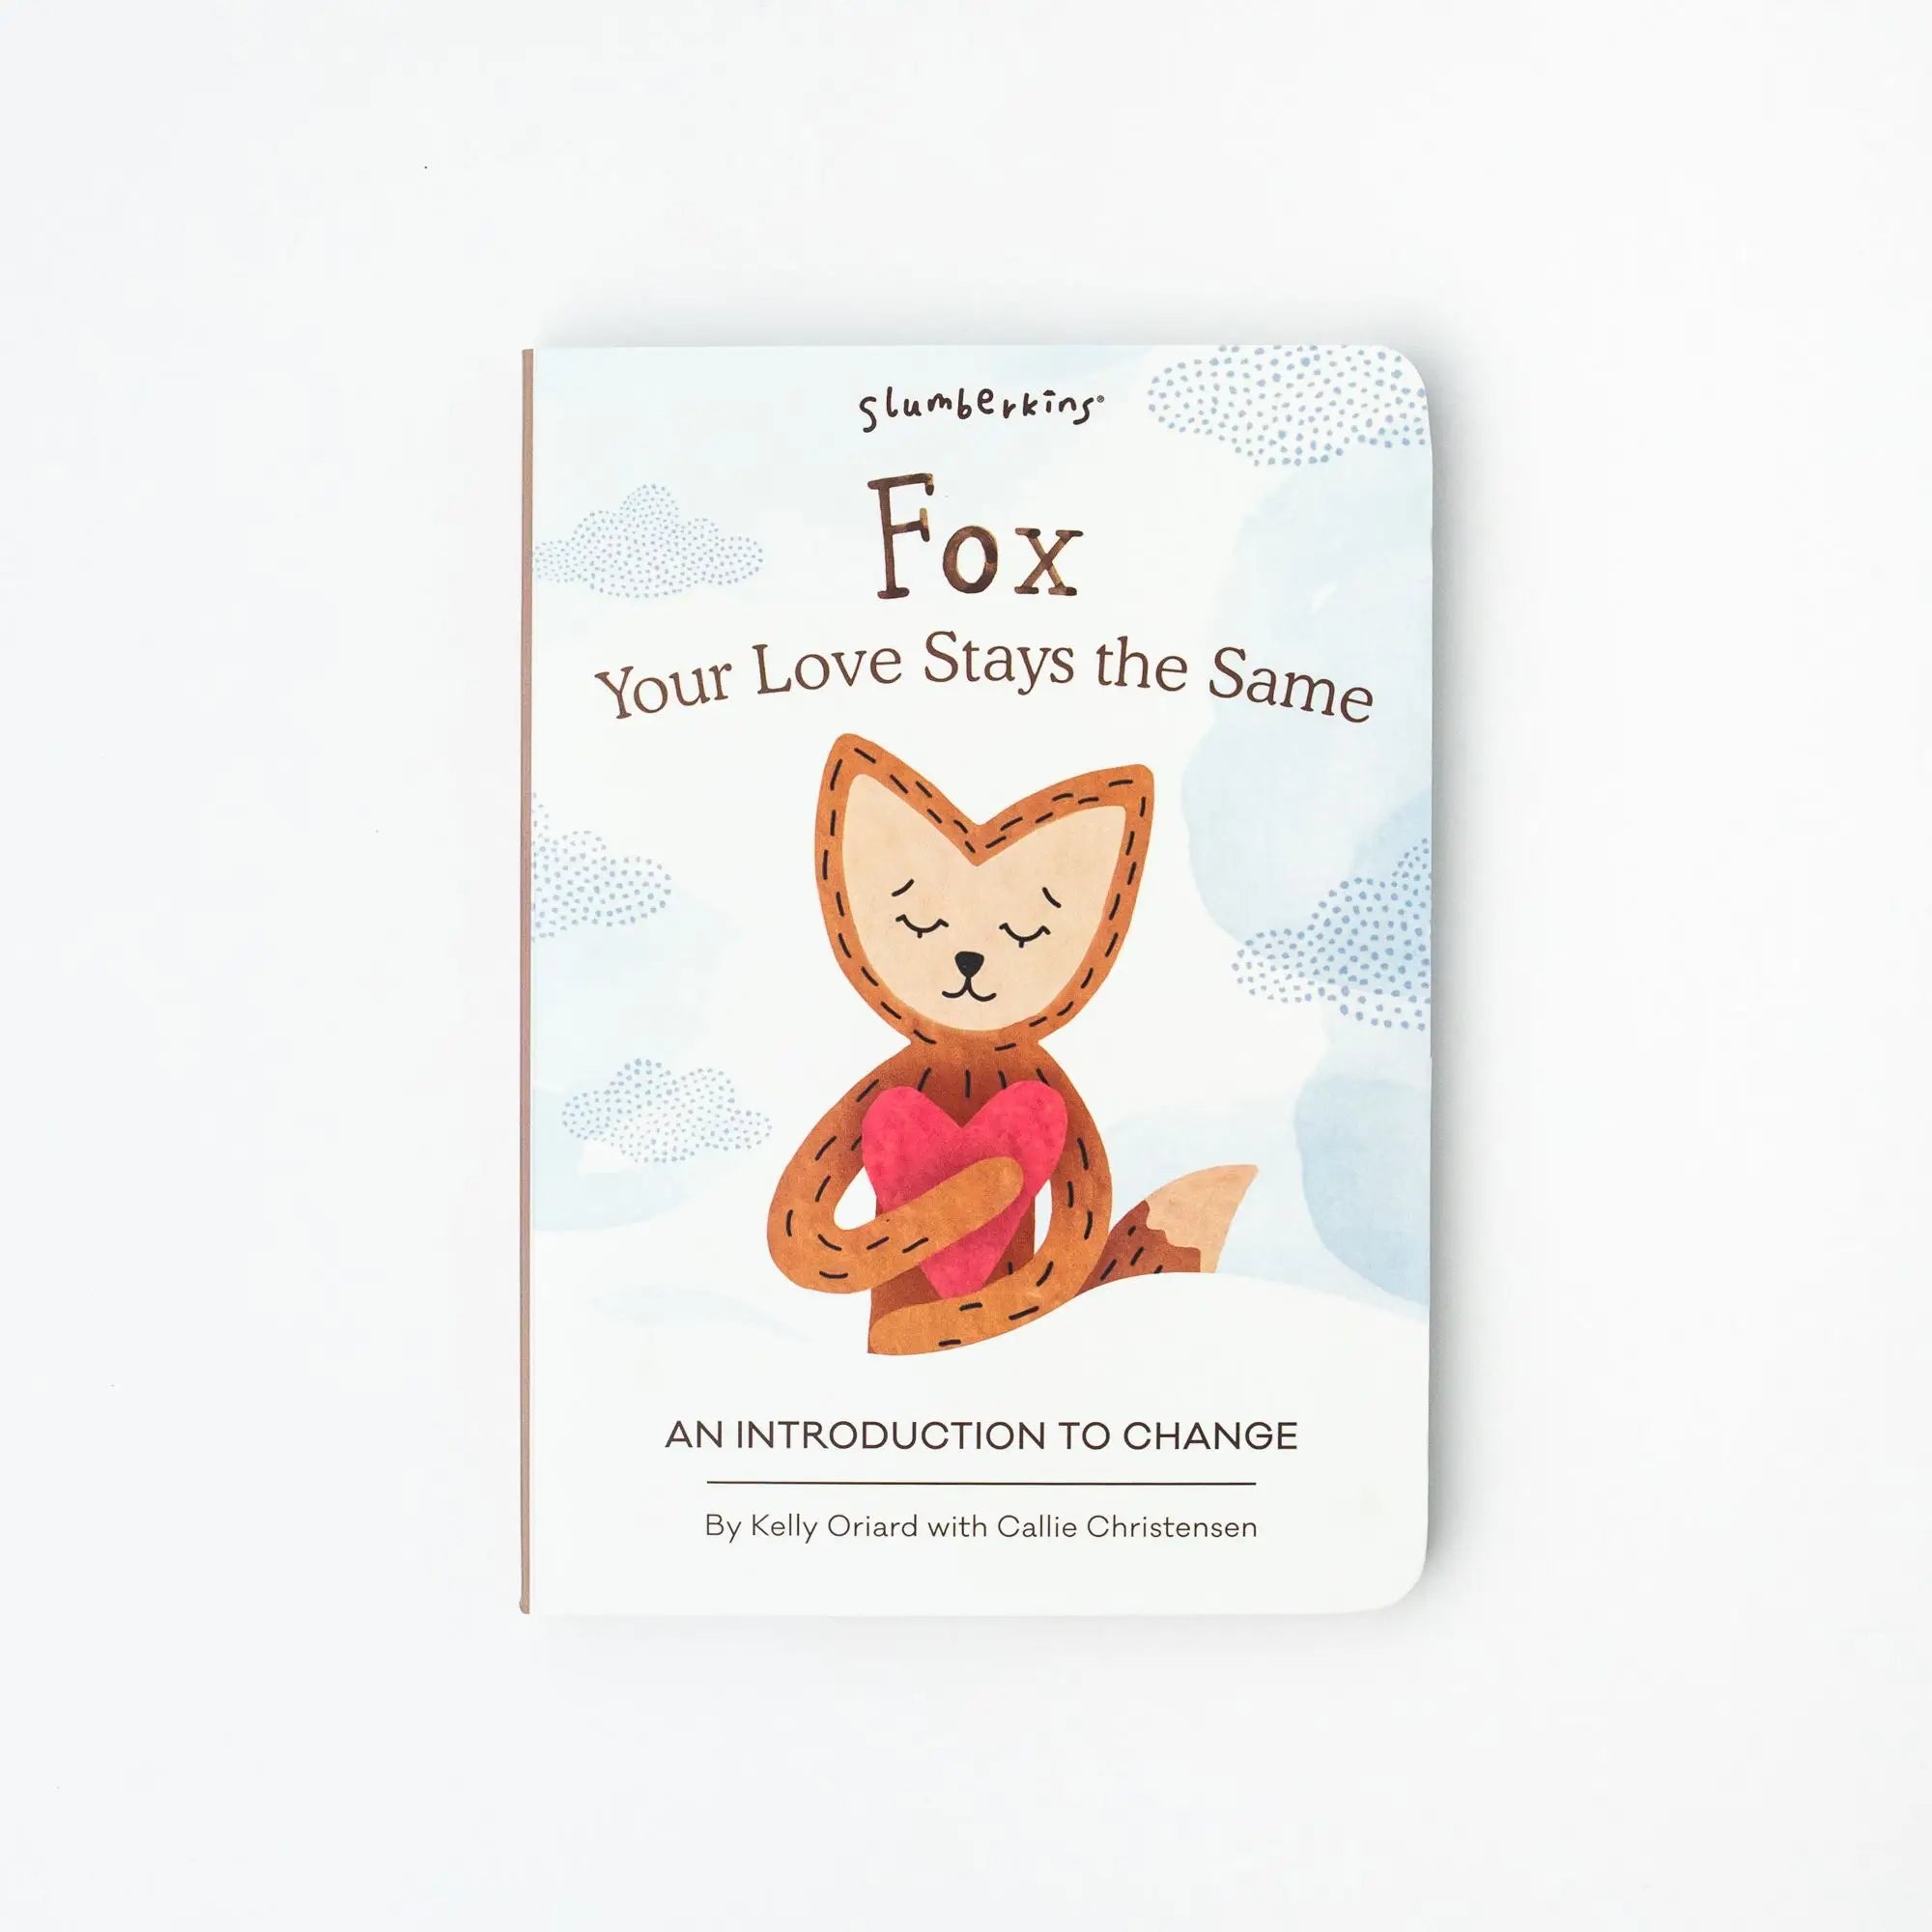 GREEN SNAIL MINI & FOX INTRO BOOK - CHANGE